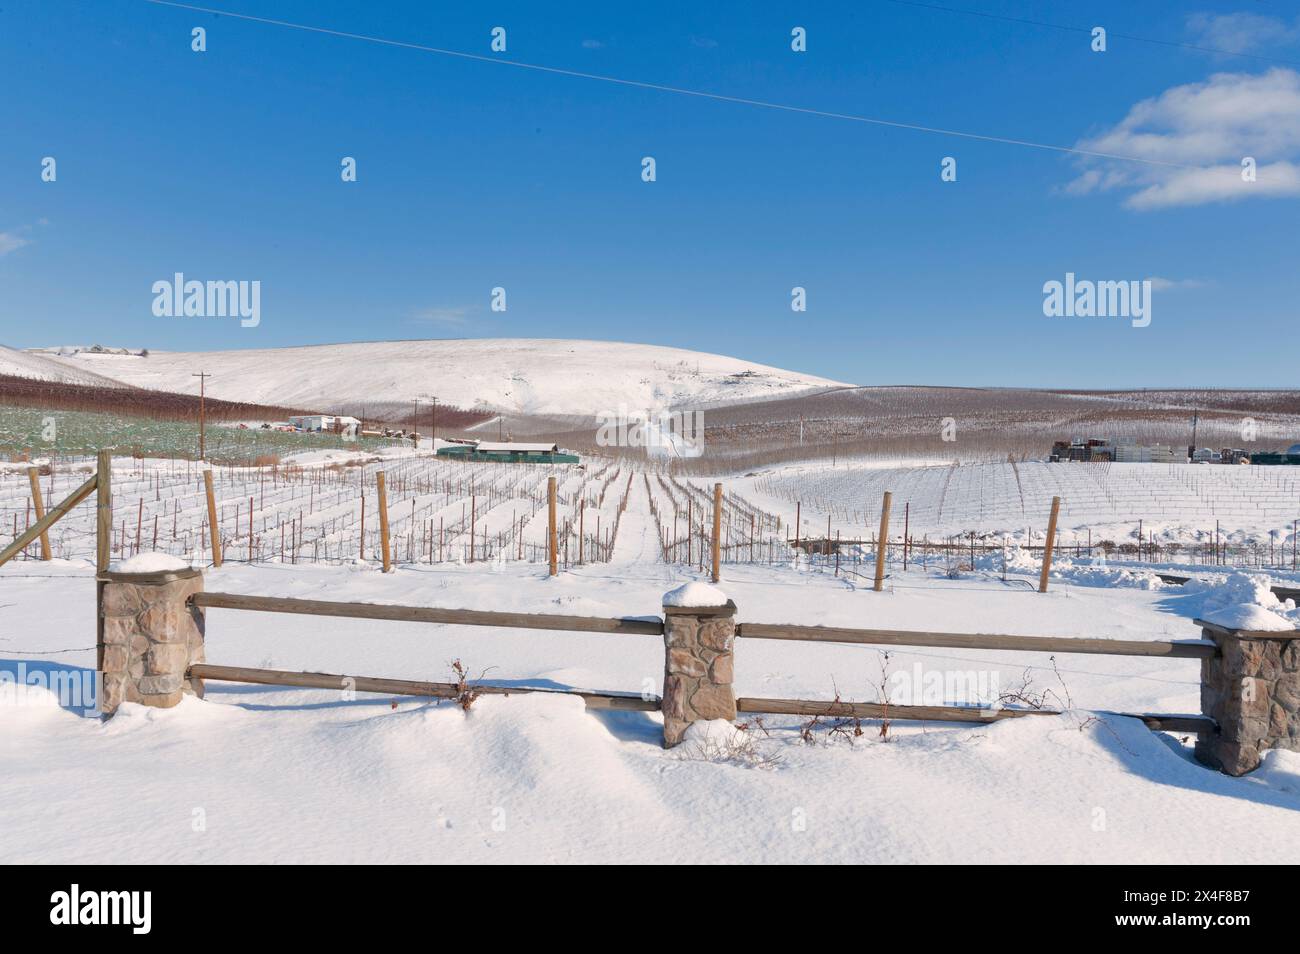 USA, Washington State, Zillah. Winter snow on vineyard and barn in Yakima Valley. Stock Photo